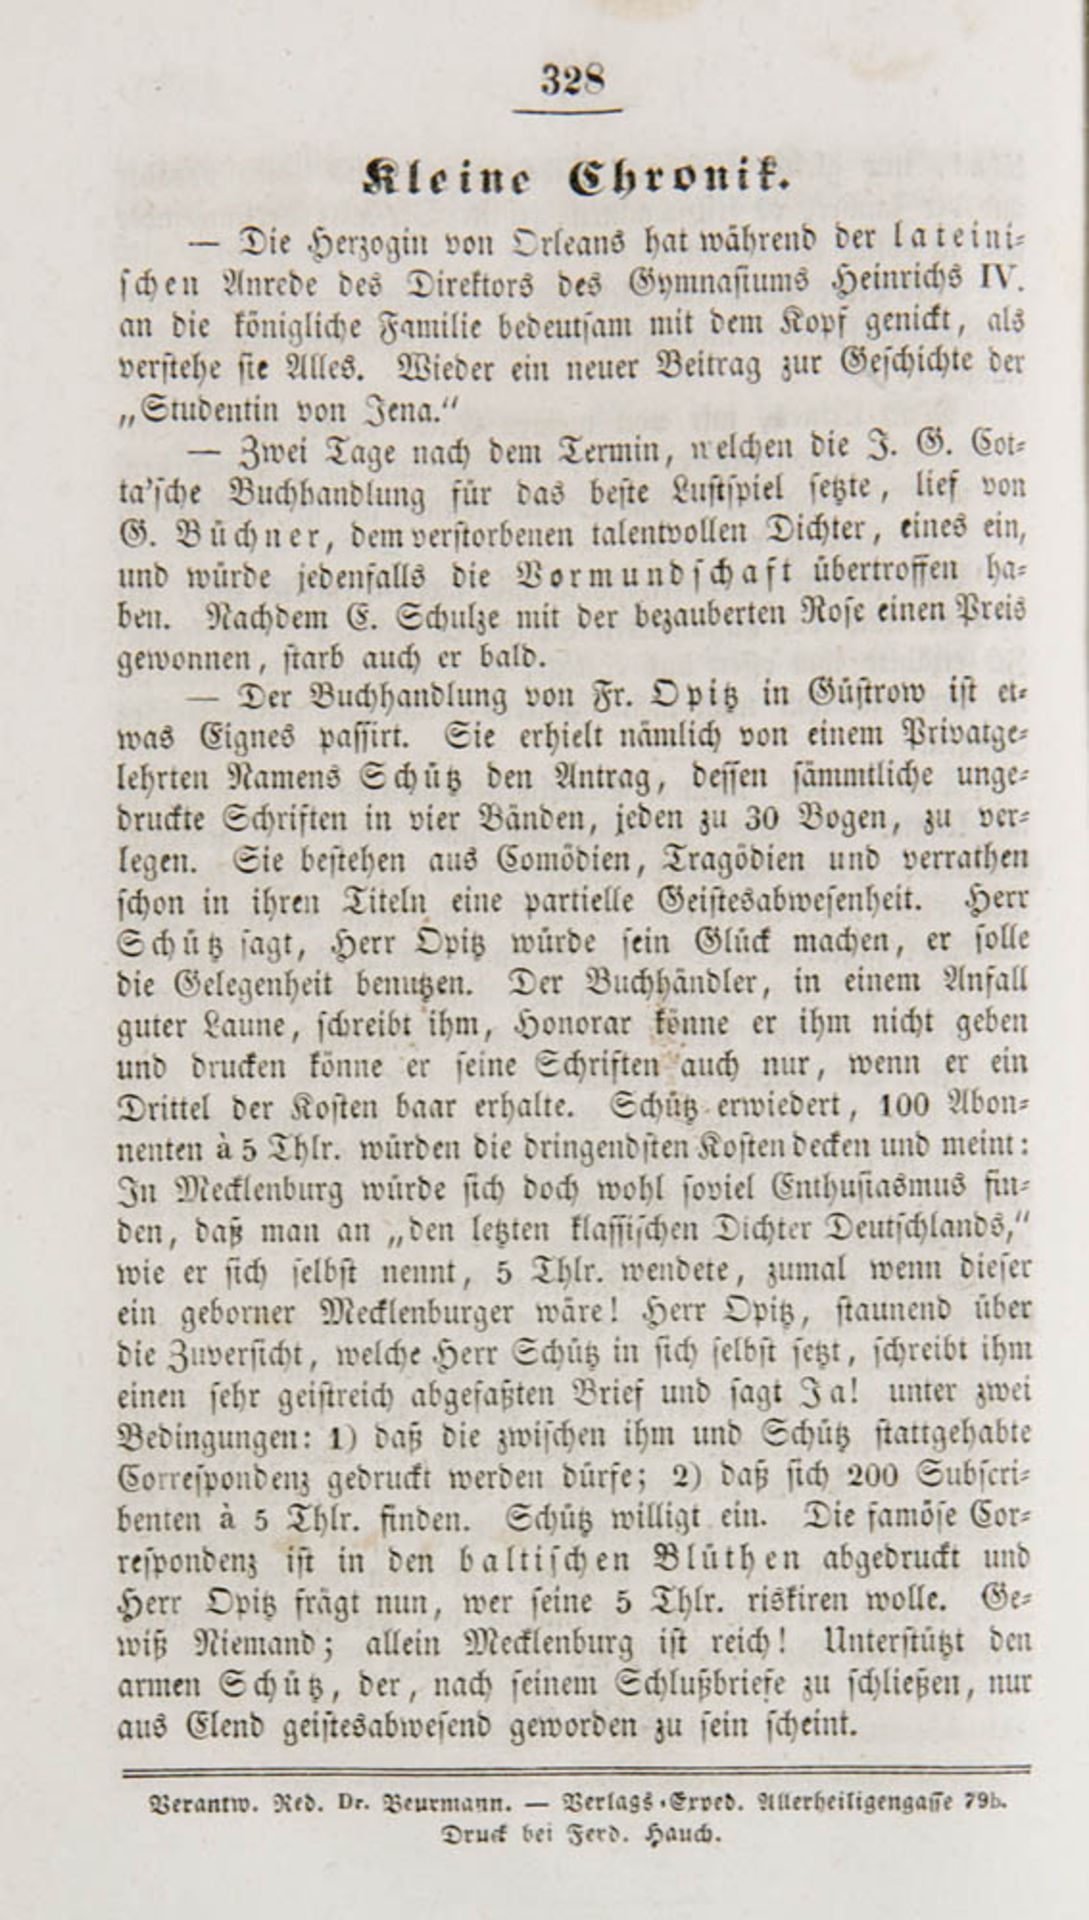 Büchner, Georg - - Beurmann, Eduard [Herausgeber des "Telegraph"] - Gutzkow, Karl.. Gedruckter